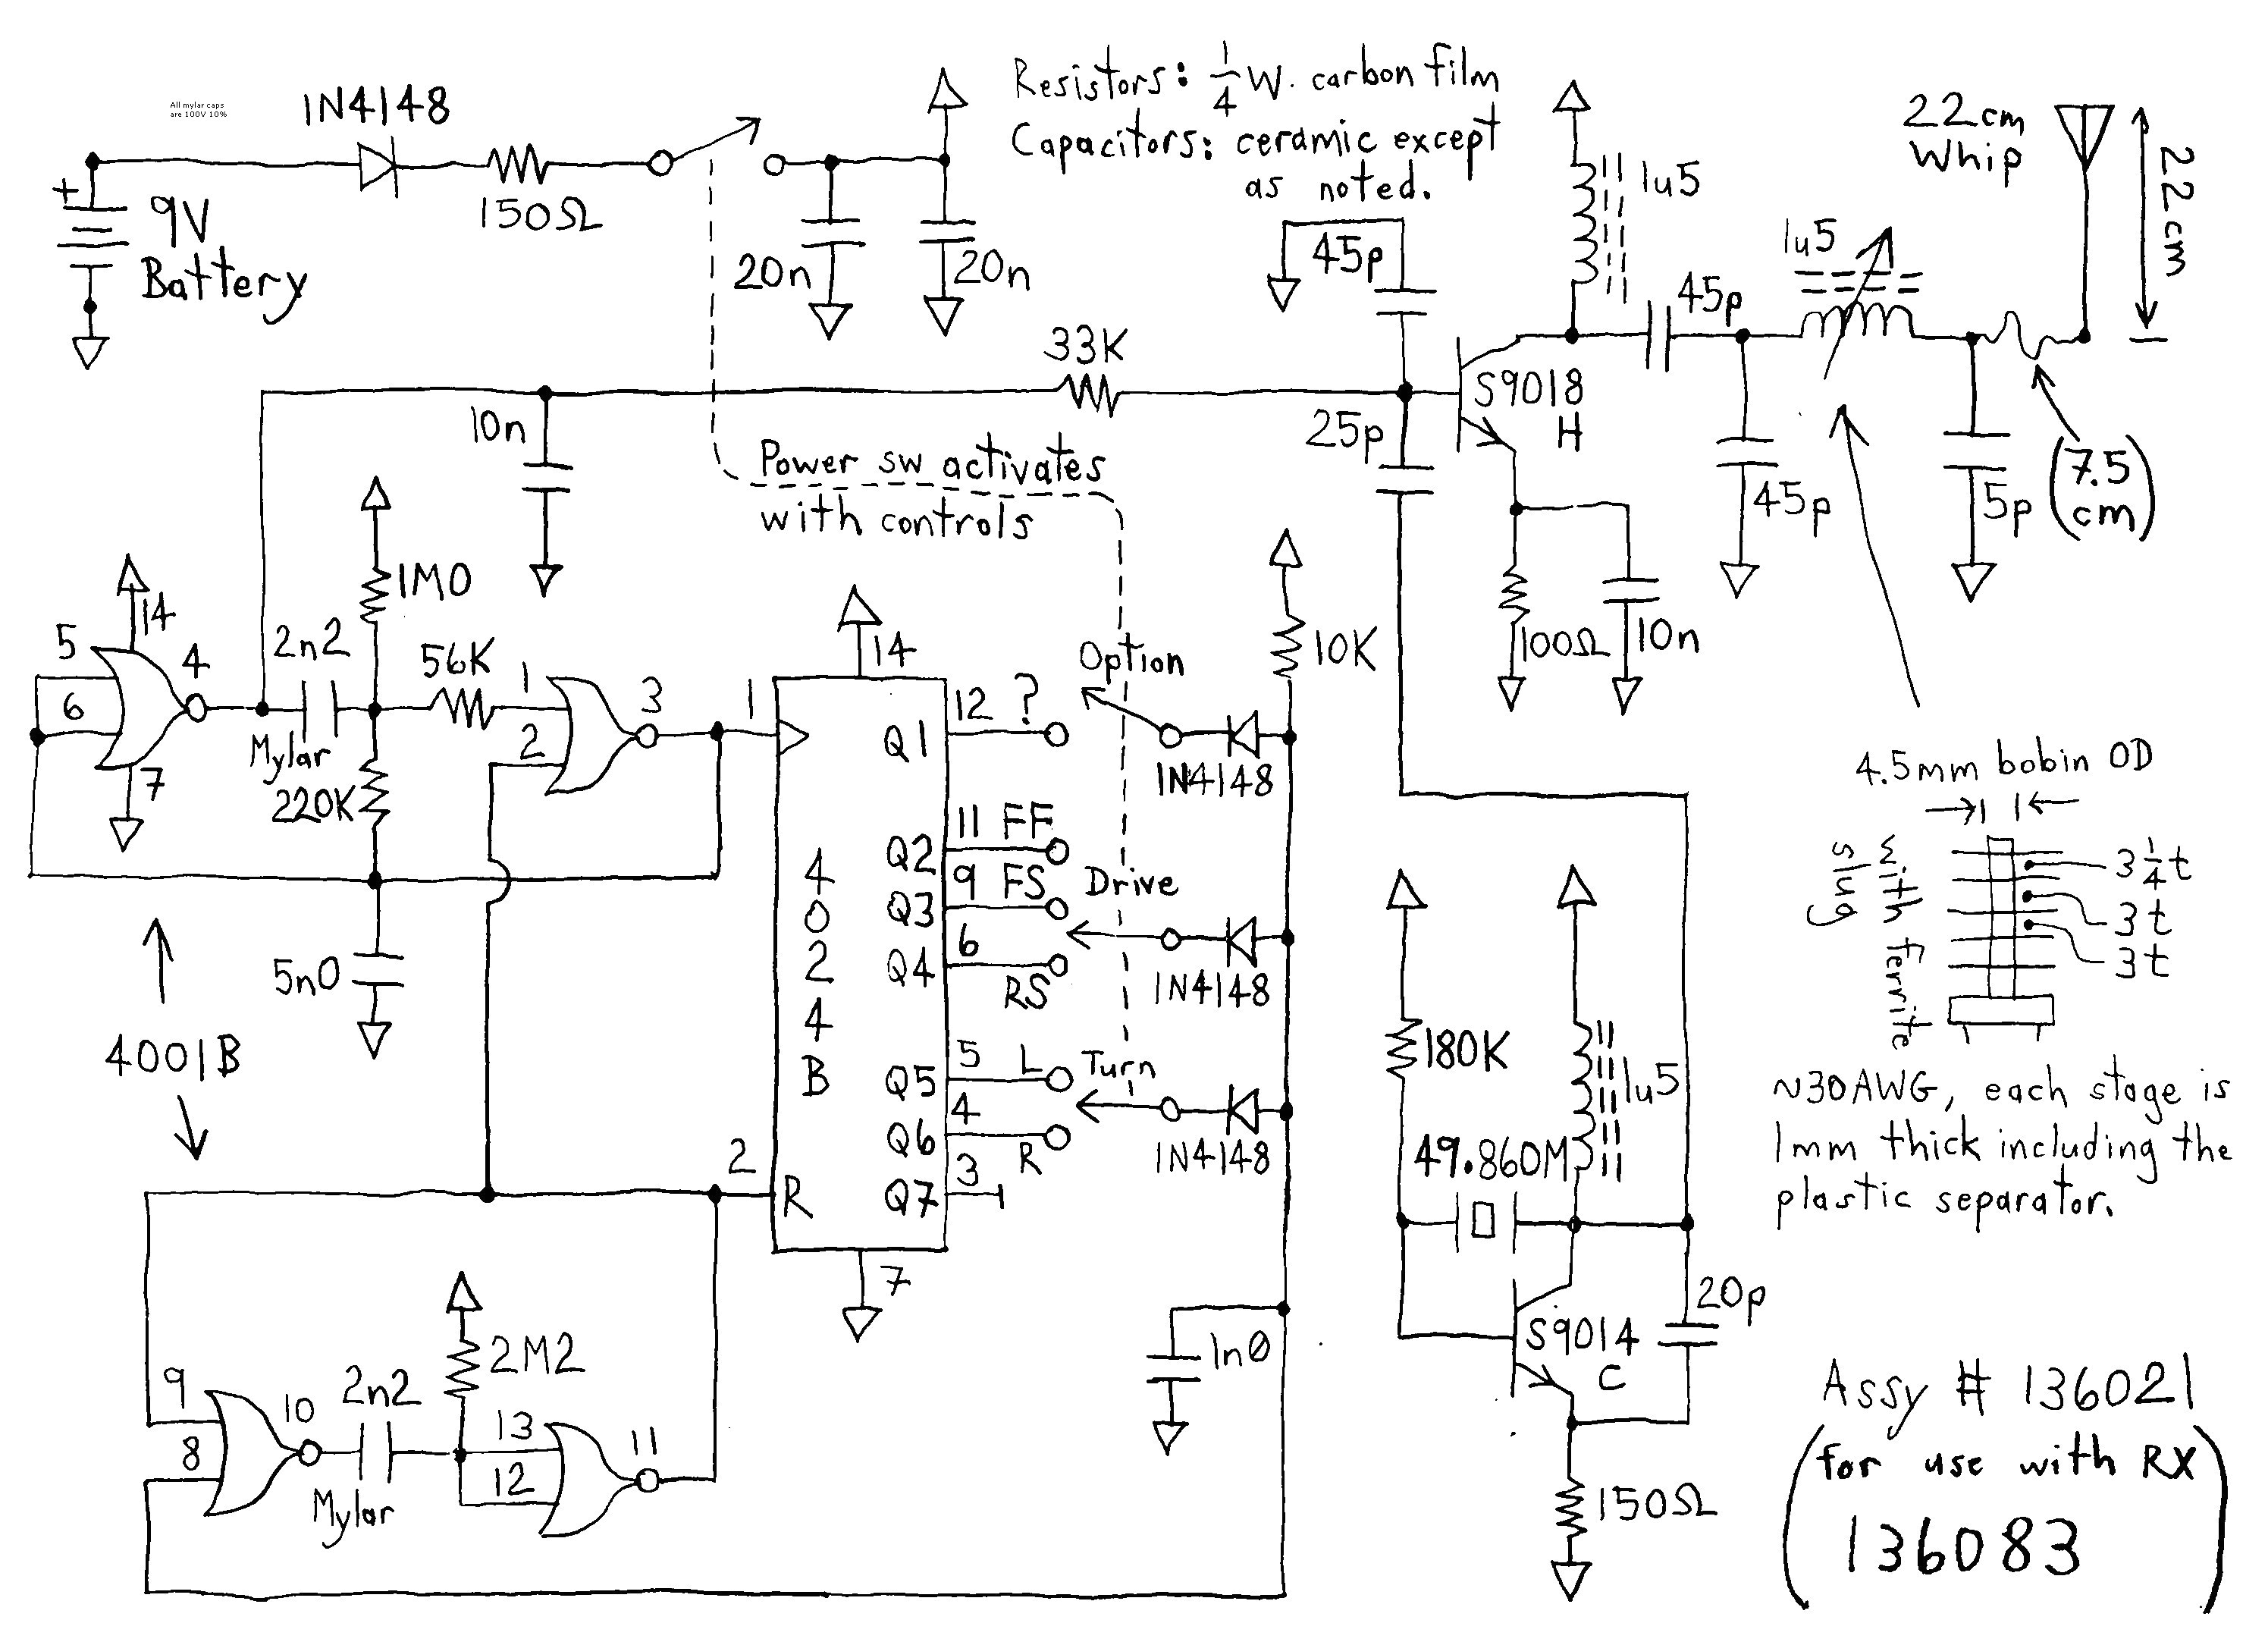 keystone wiring diagrams wiring diagram inside keystone cougar wiring diagrams keystone wiring diagrams